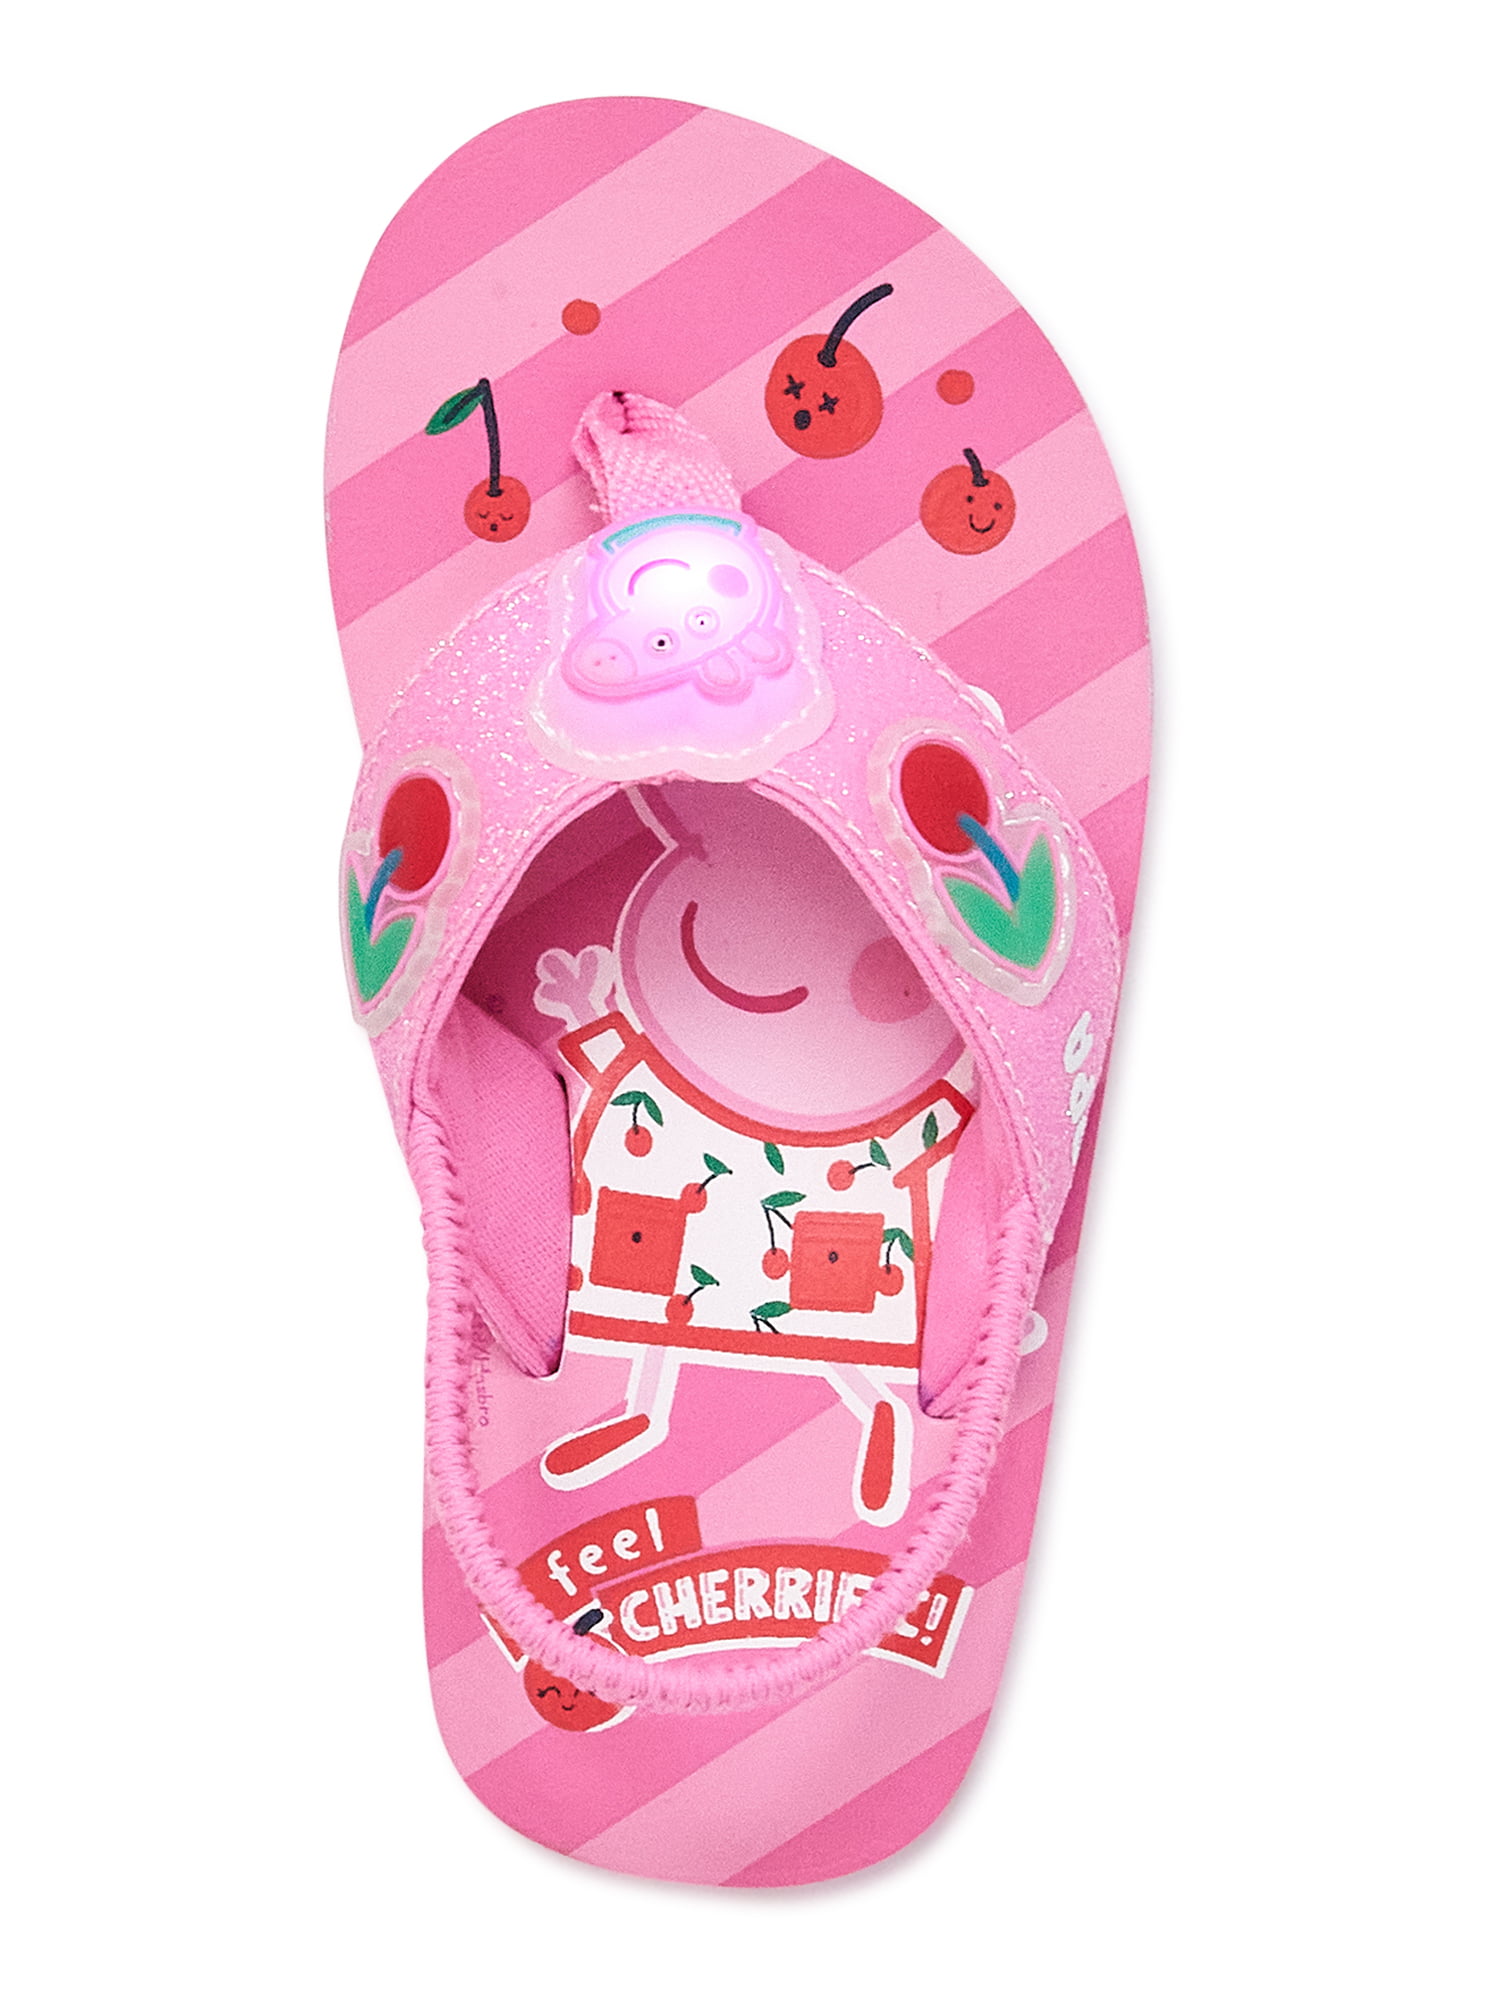 Sizes UK 5 to 11 Fun Peppa Design Gift for Girls Pepa Pig Girls Slip On Clogs Flip Flops Lightweight Garden Pool Beach Holiday Sandals